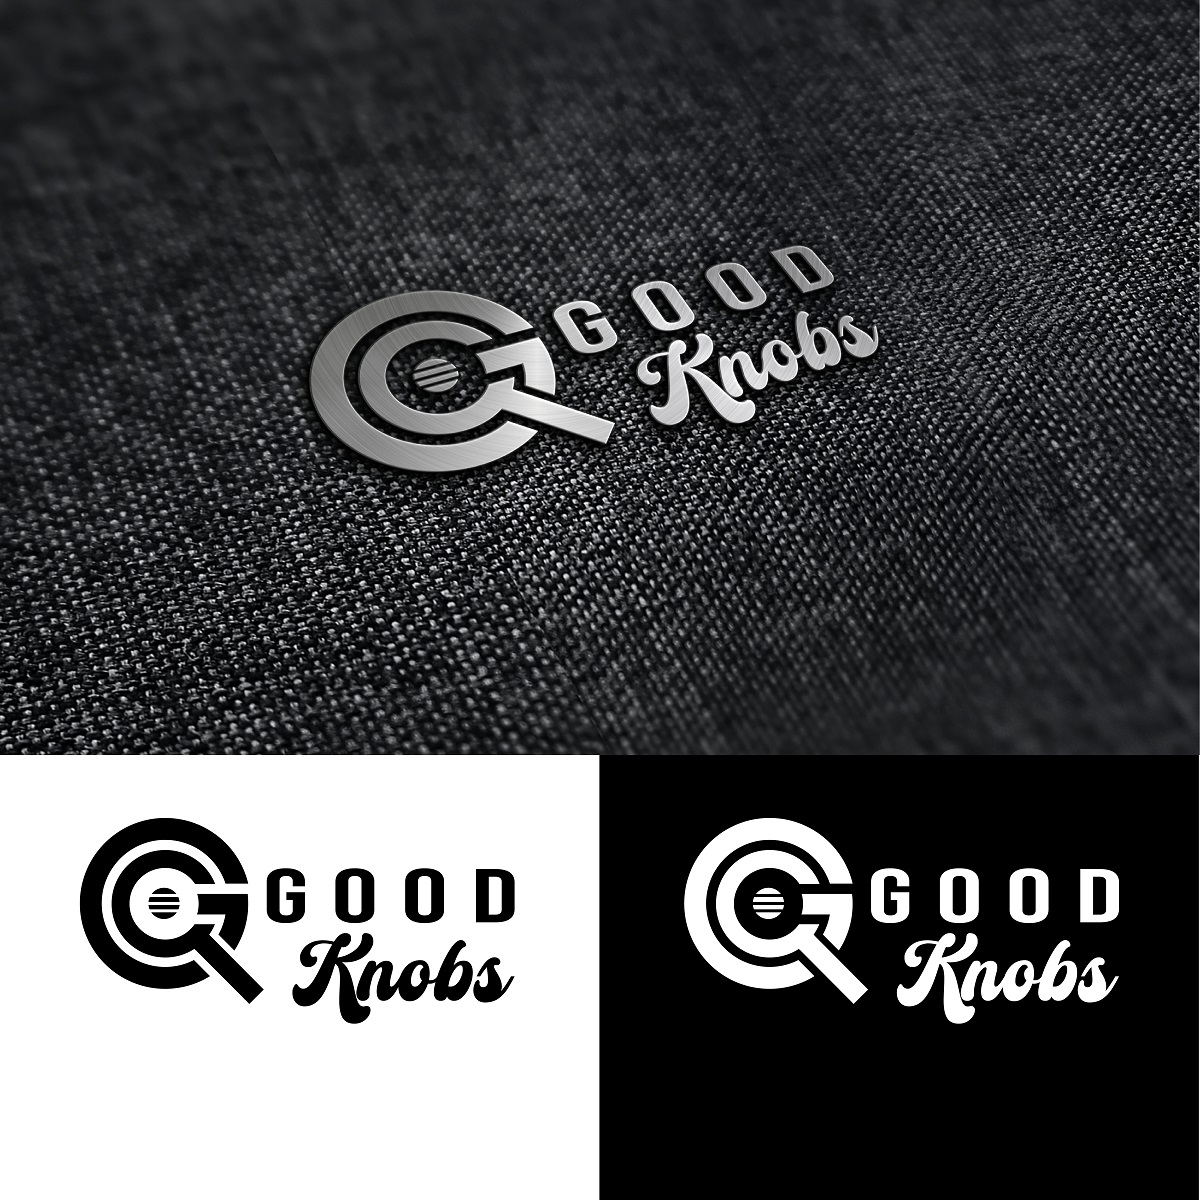 Good Knobs
.
.
.
.
#logo #logos #logotype #logodesigner #customlogo #brandidentity #graphicdesigner #design #identity #brandlogo #logomaker #designinspiration #branding #art #monogram #fashion #brand #ilustracion #Creative #elangelitodesign #designrd #marca #Flyers